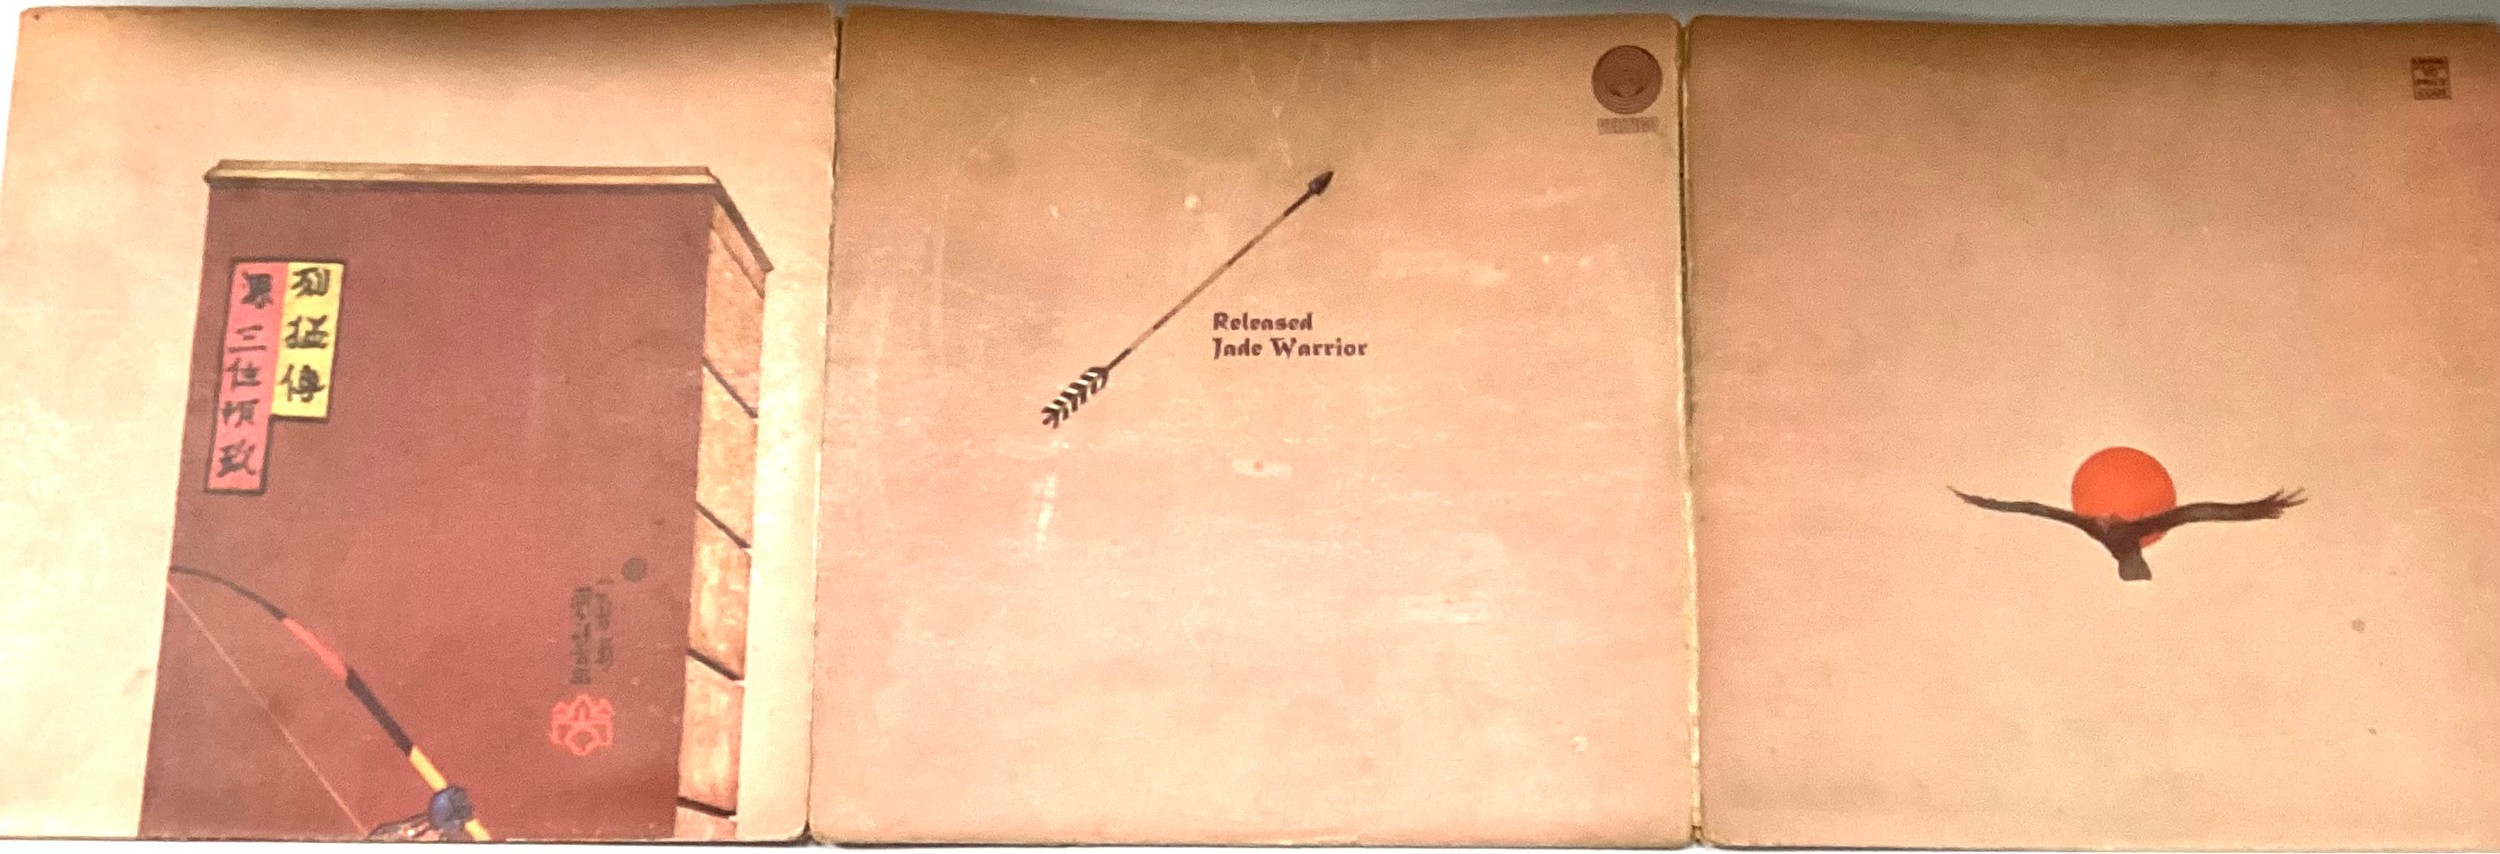 JADE WARRIOR VINYL VERTIGO SWIRL ALBUM ‘RELEASED’. This Ex condition album is from 1971 and on the - Image 2 of 9